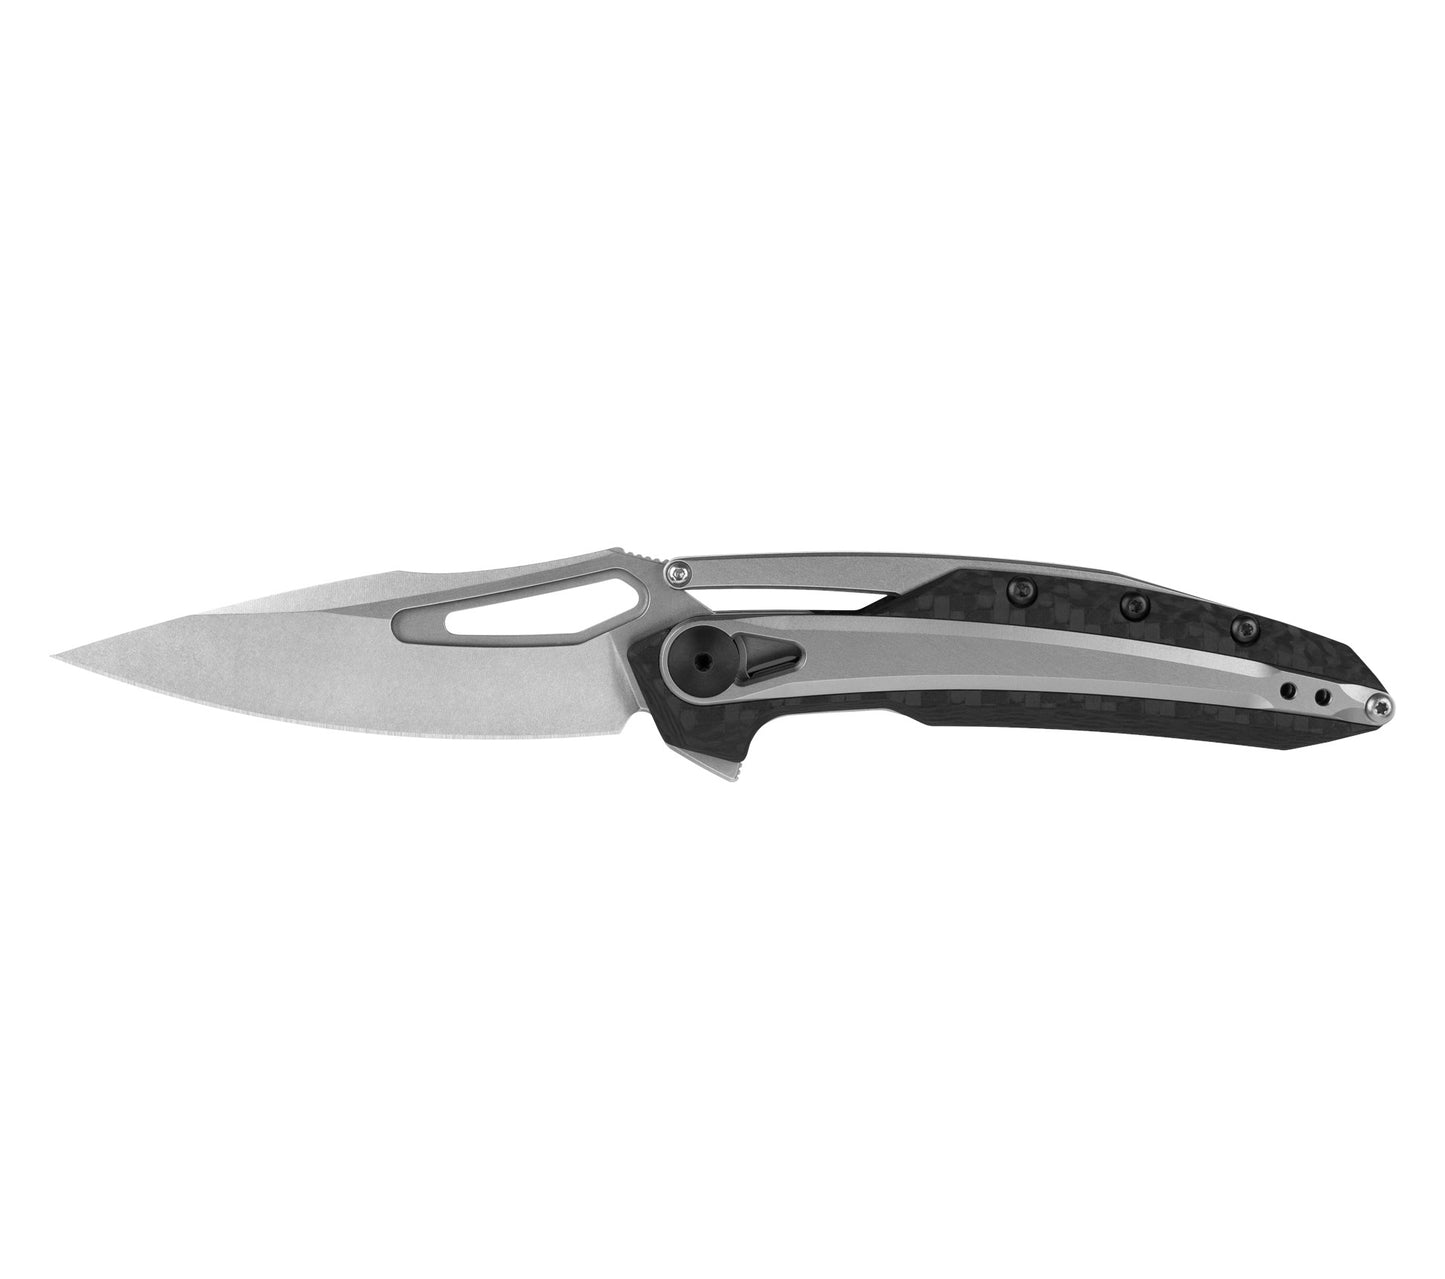 Zero Tolerance 0990 3.25" CPM 20CV Carbon Fiber Folding Knife